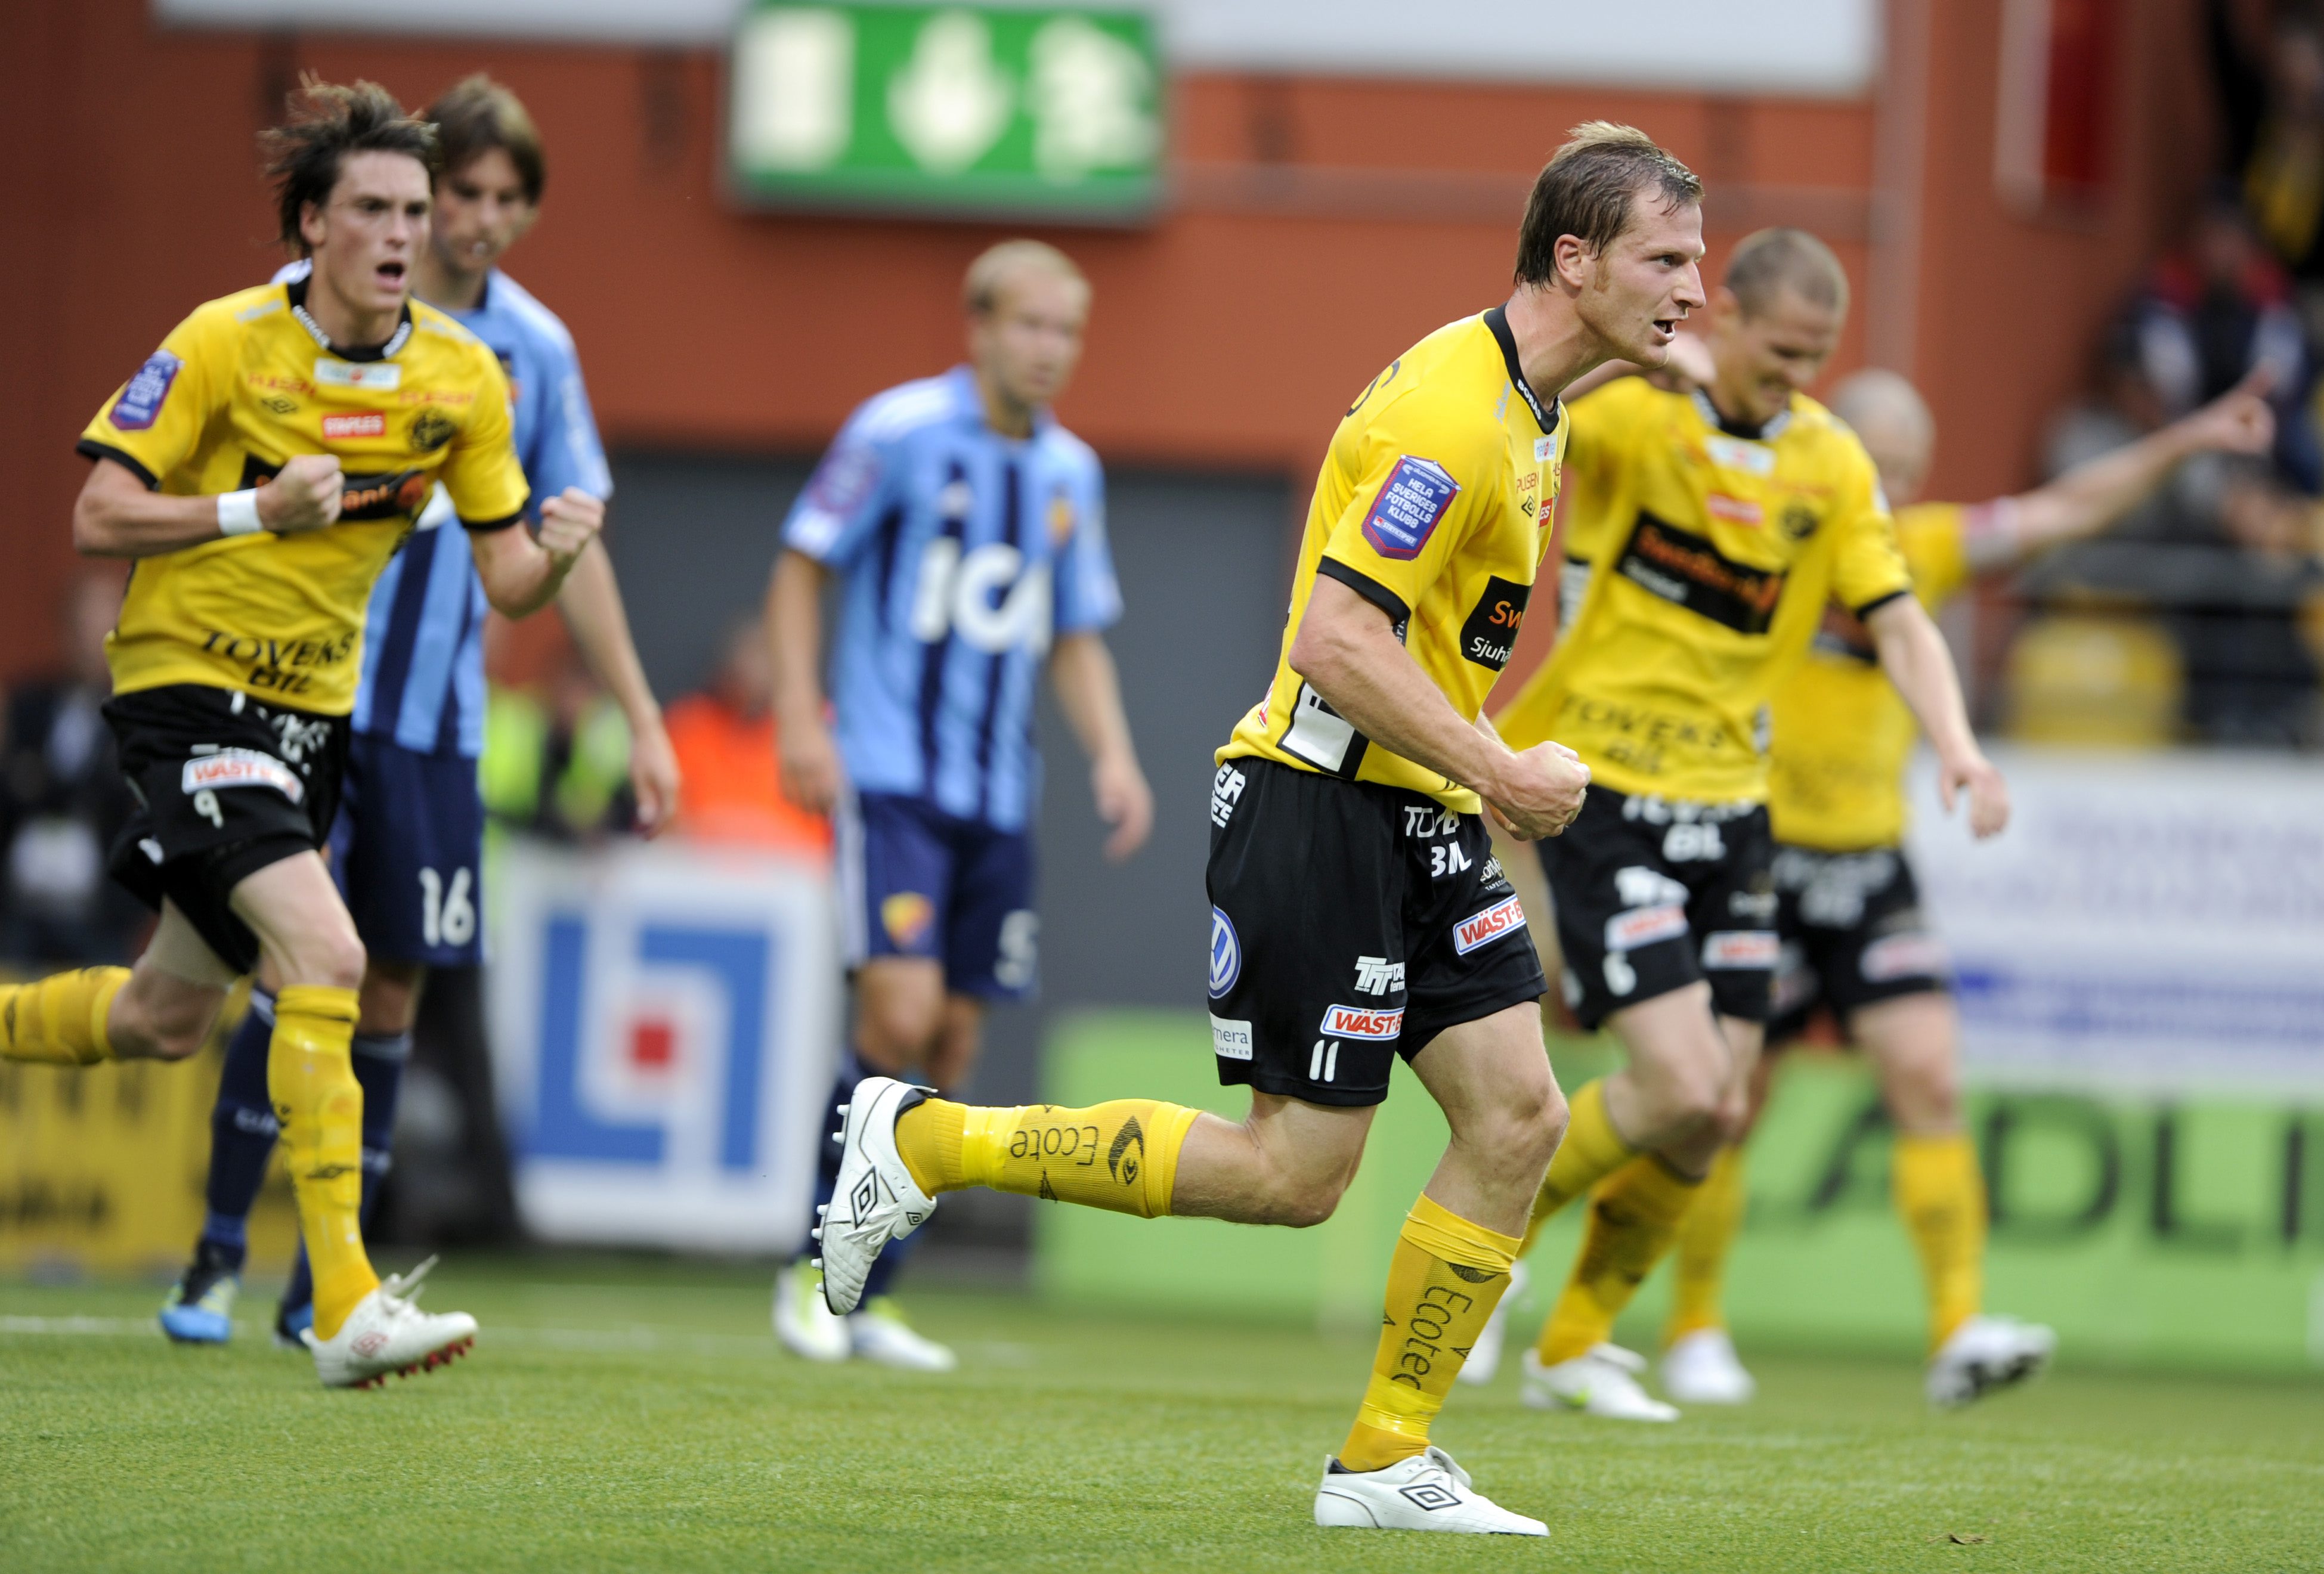 Daniel Sjolund, Allsvenskan, Mattias Jonsson, Djurgården IF, IF Elfsborg